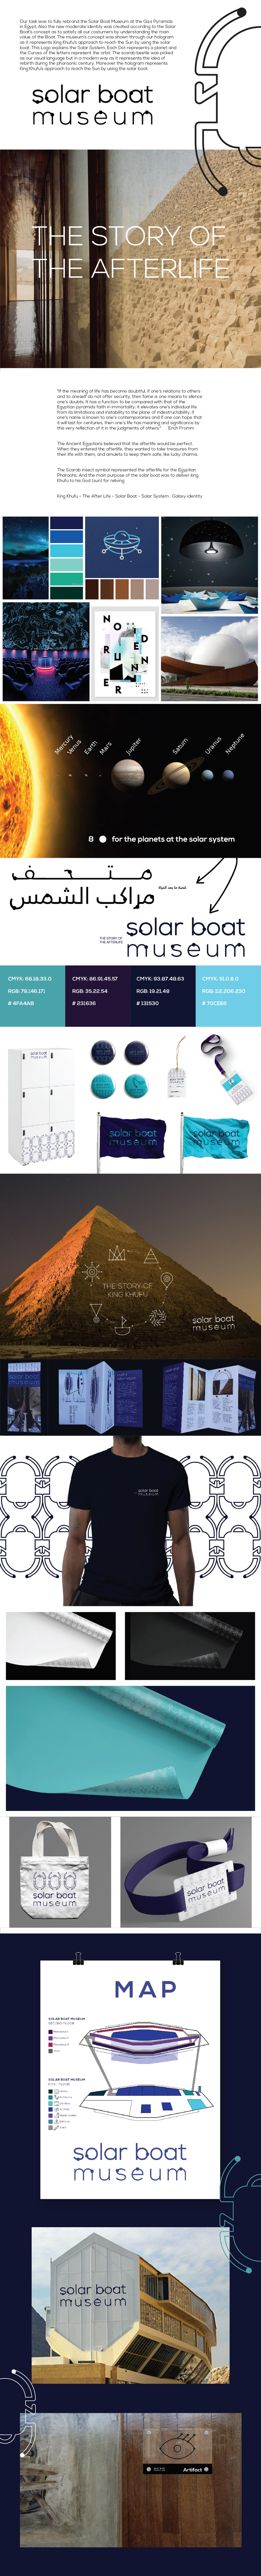 egypt branding  identity creative design logo UI application museum placebranding